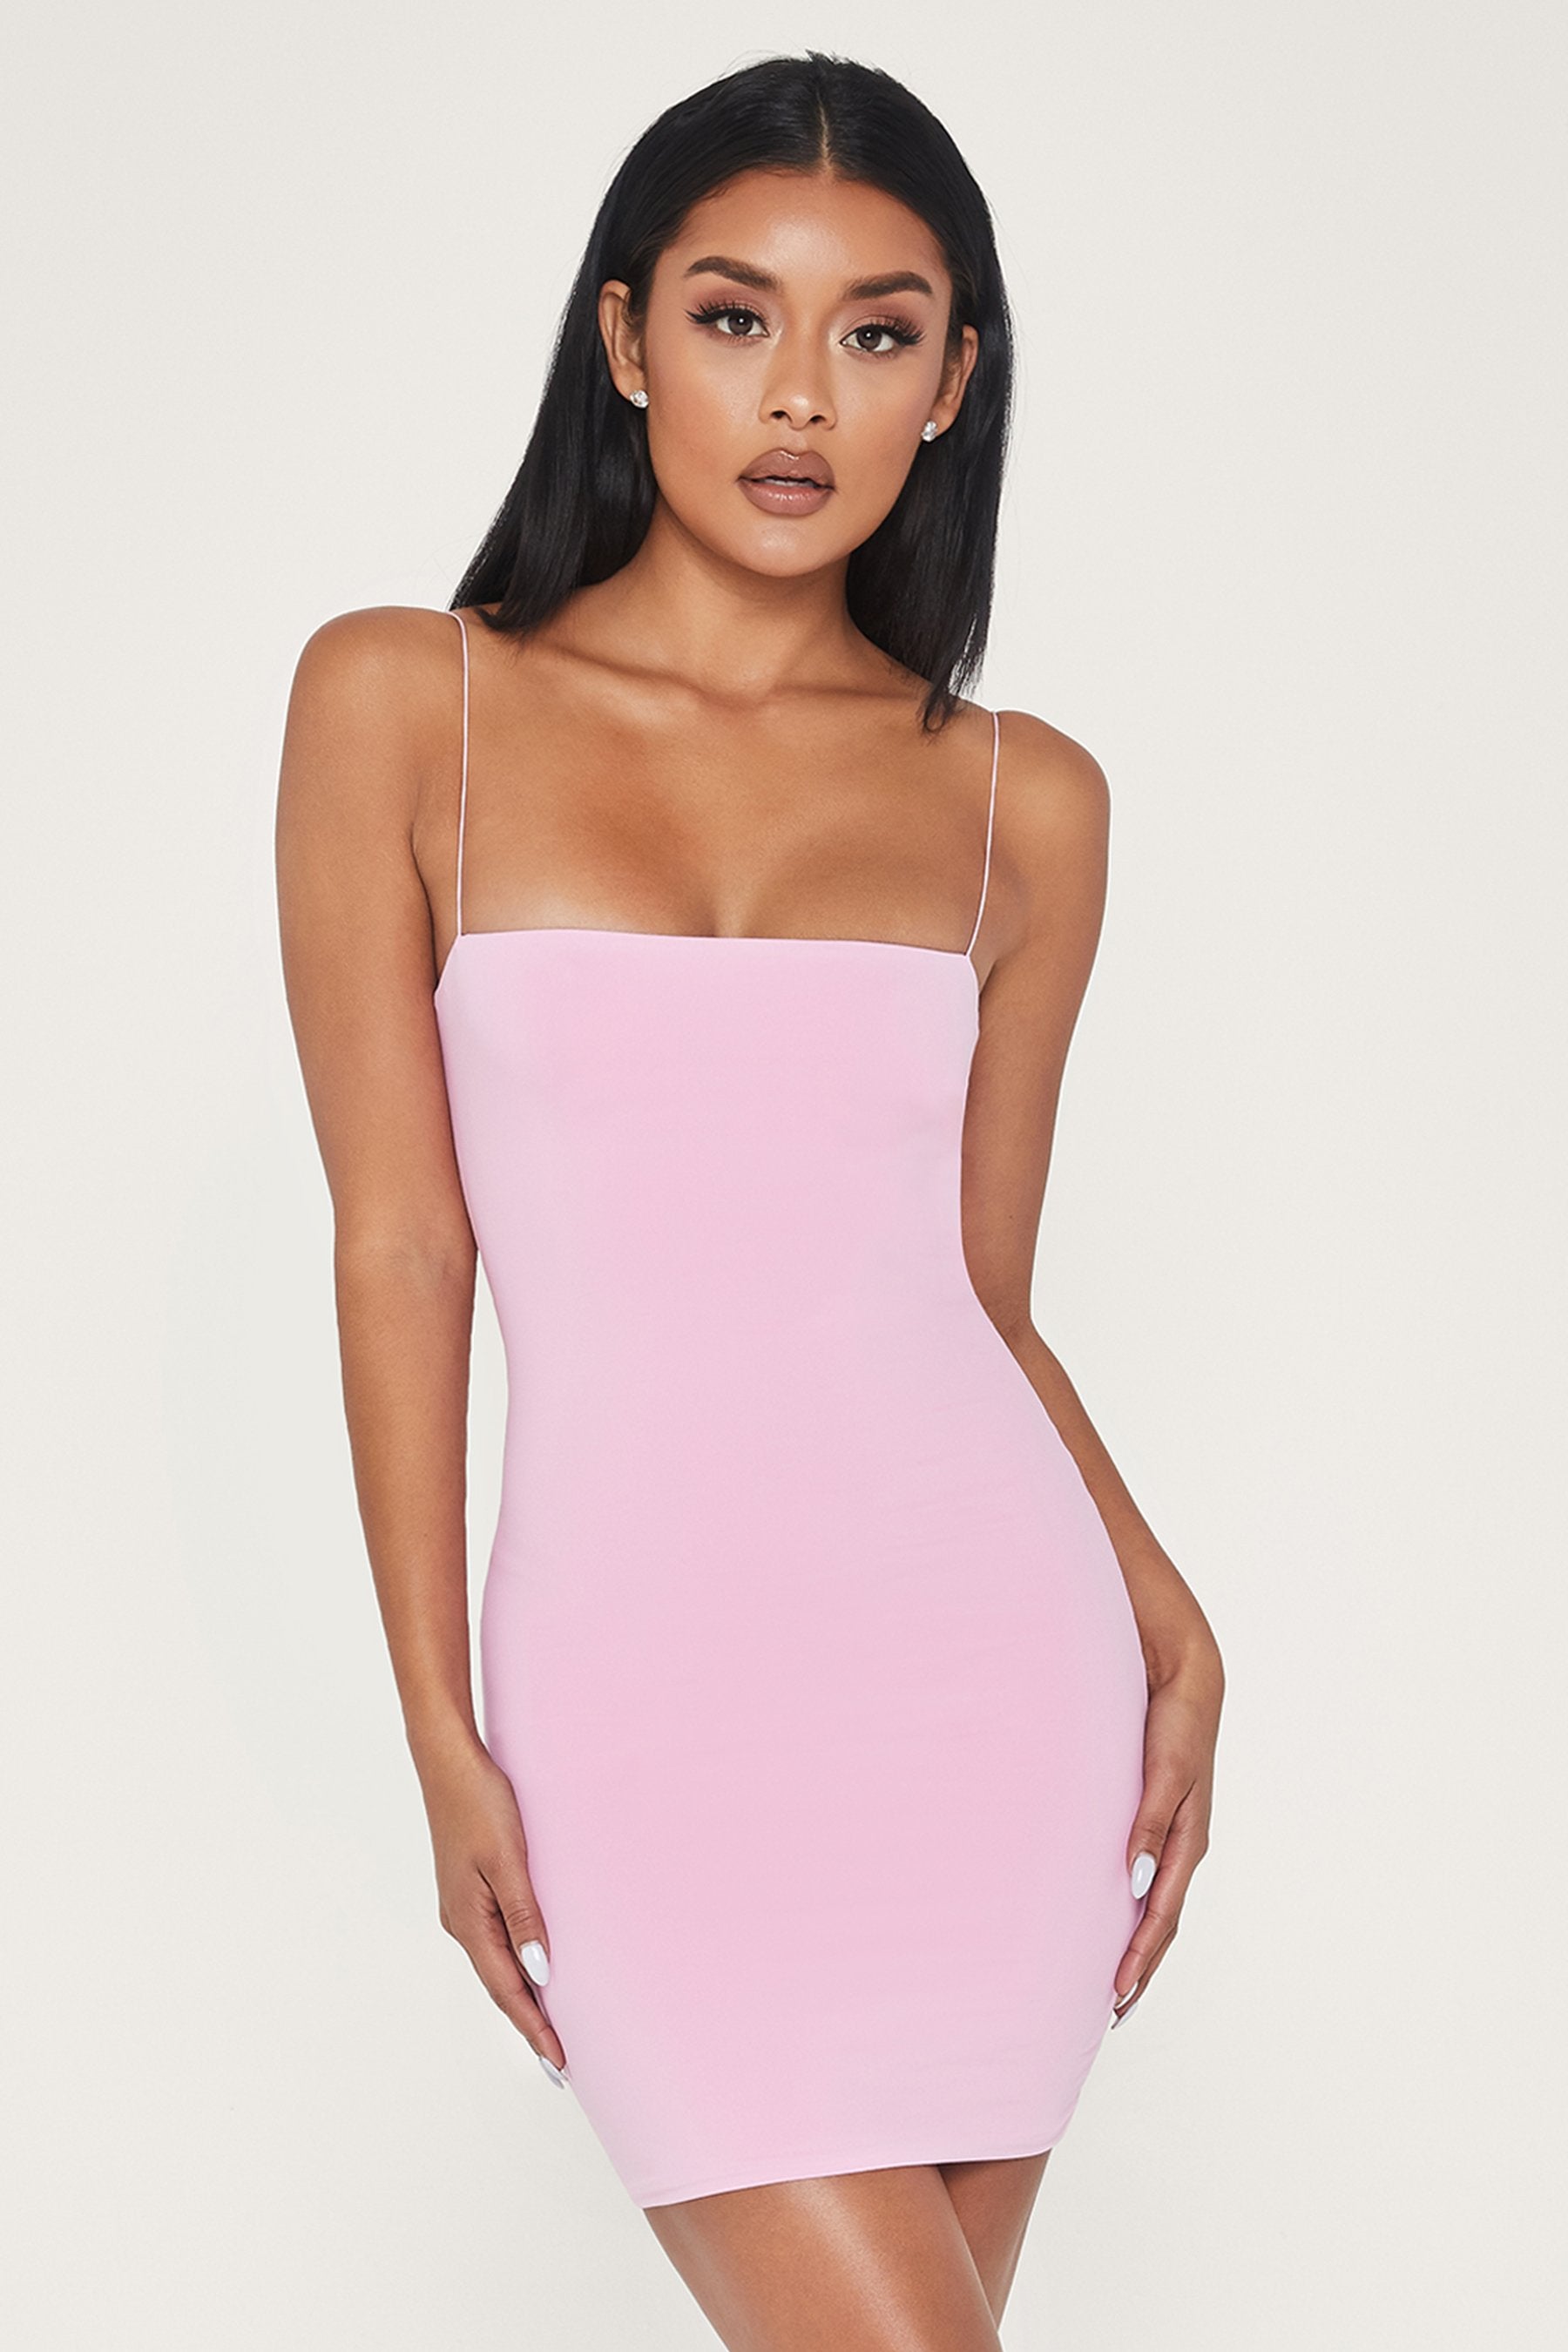 meshki pink dress